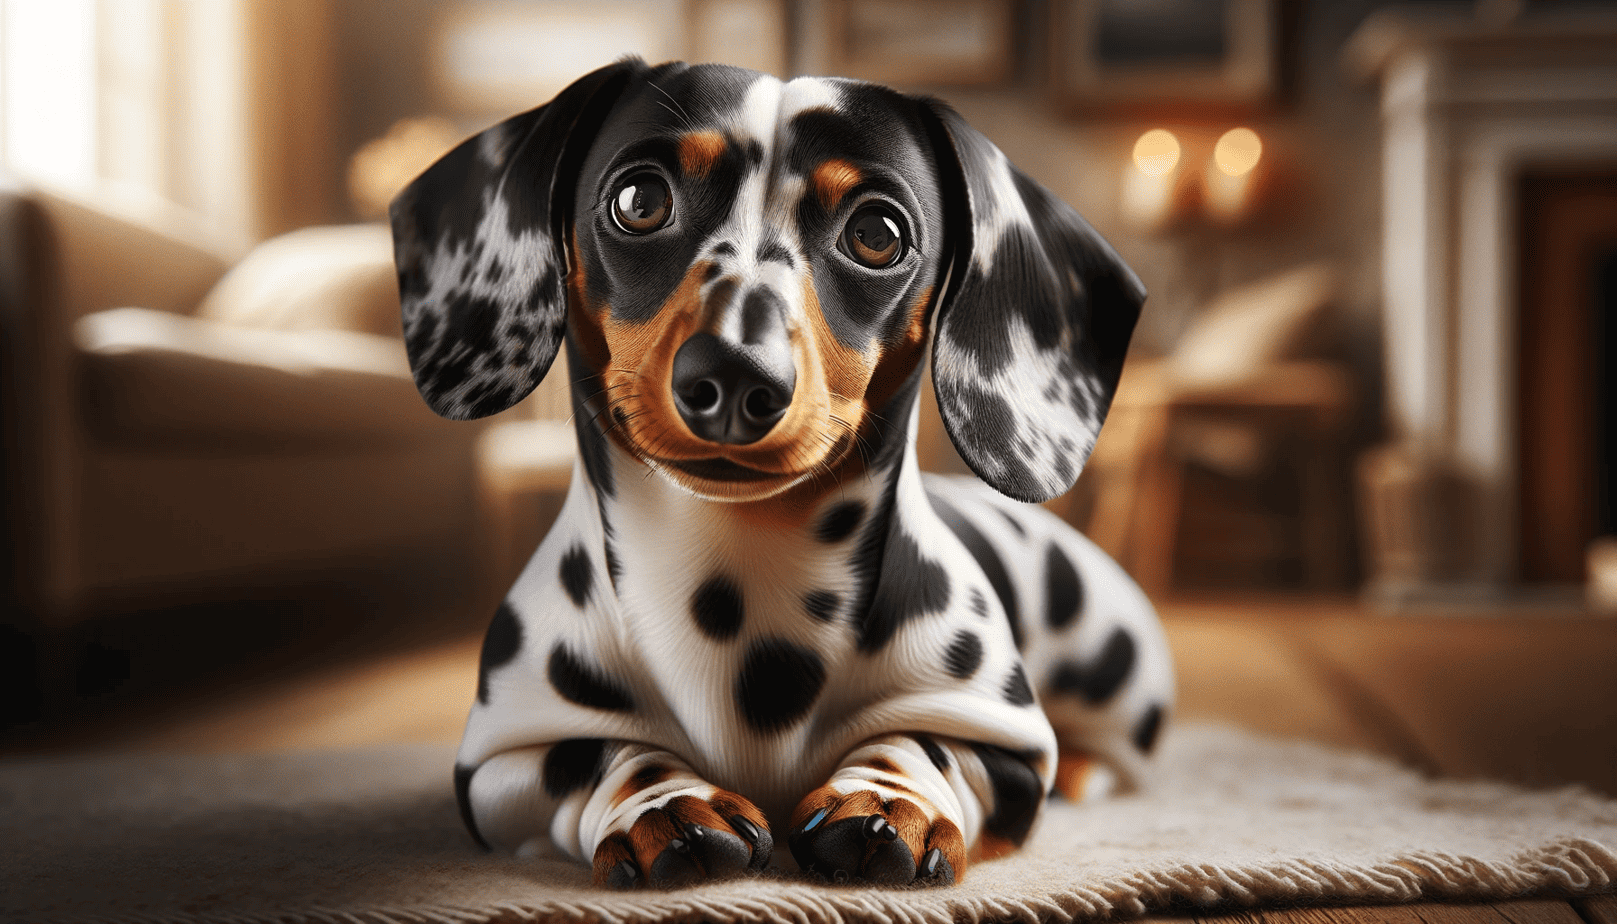 miniature piebald dachshund